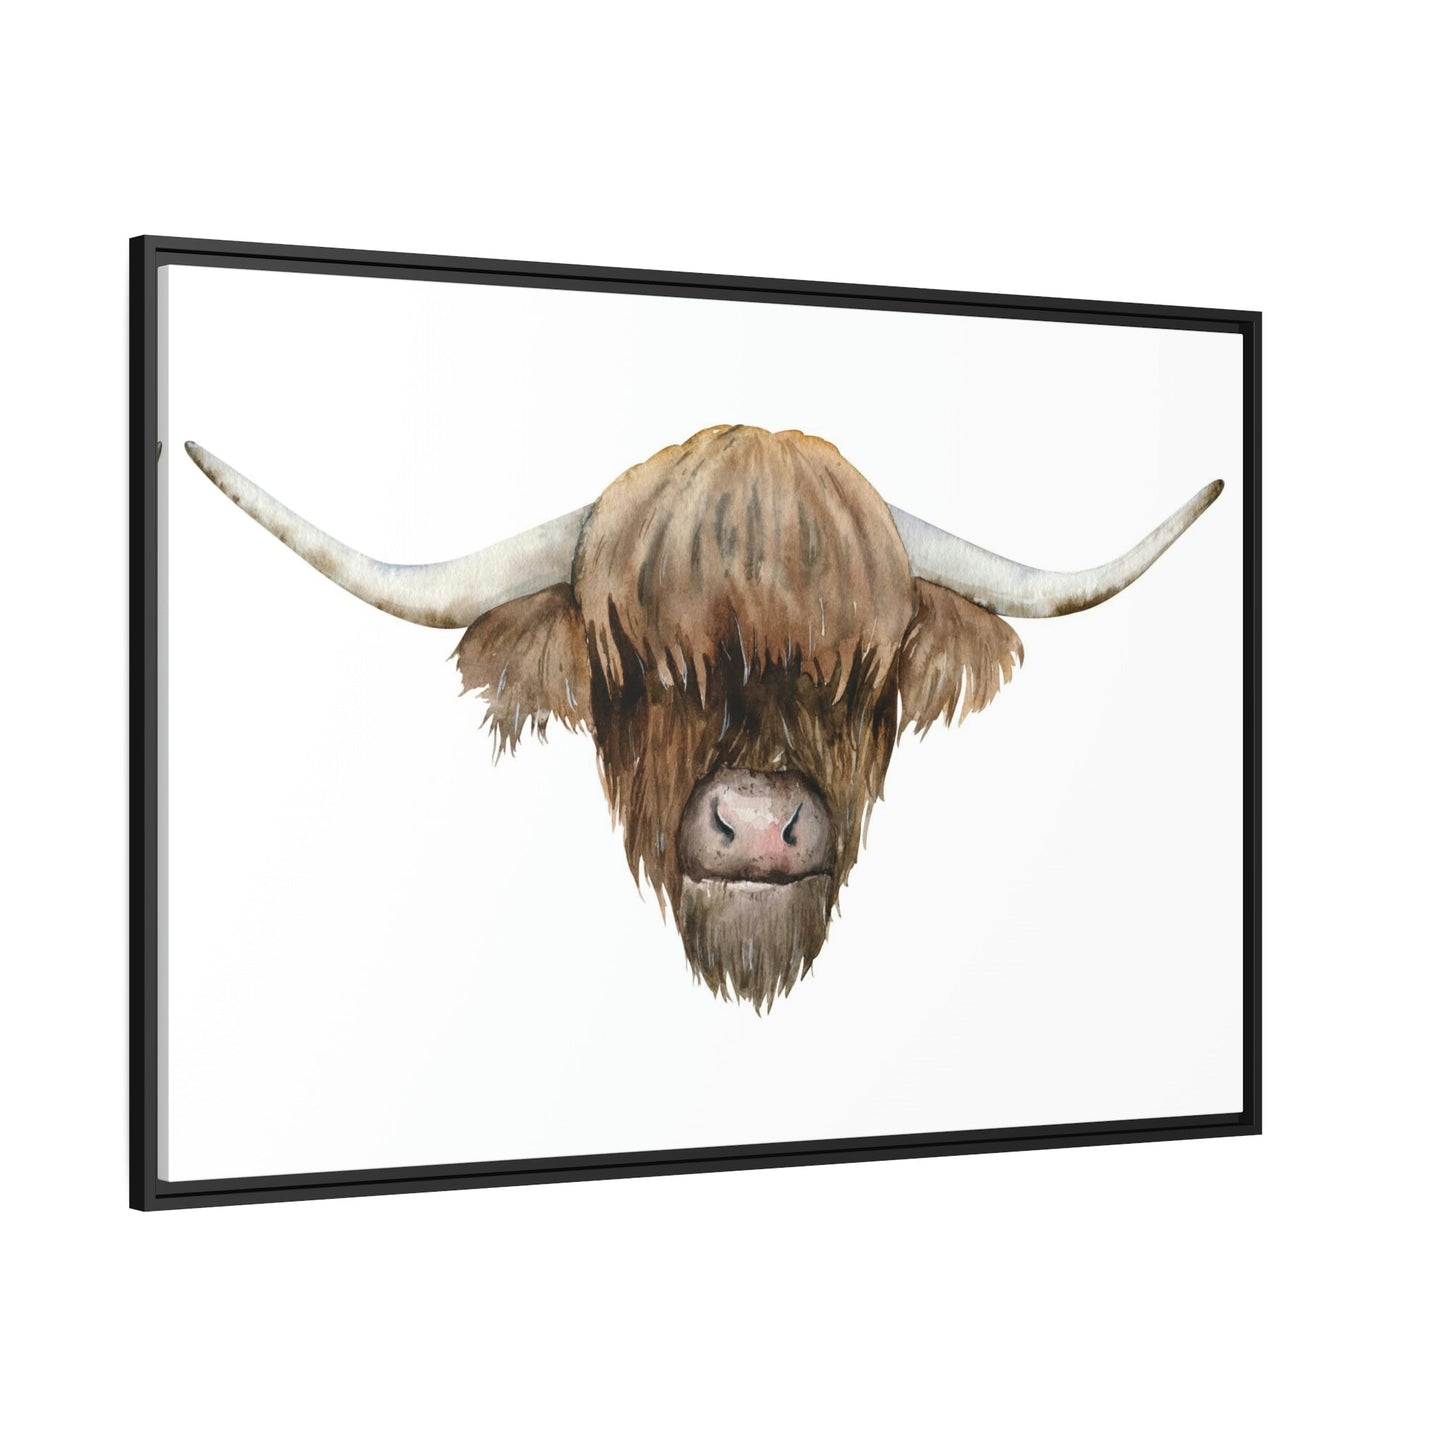 Gentle Bovine Beauty: Cow Art for a Timeless Wall Art Statement